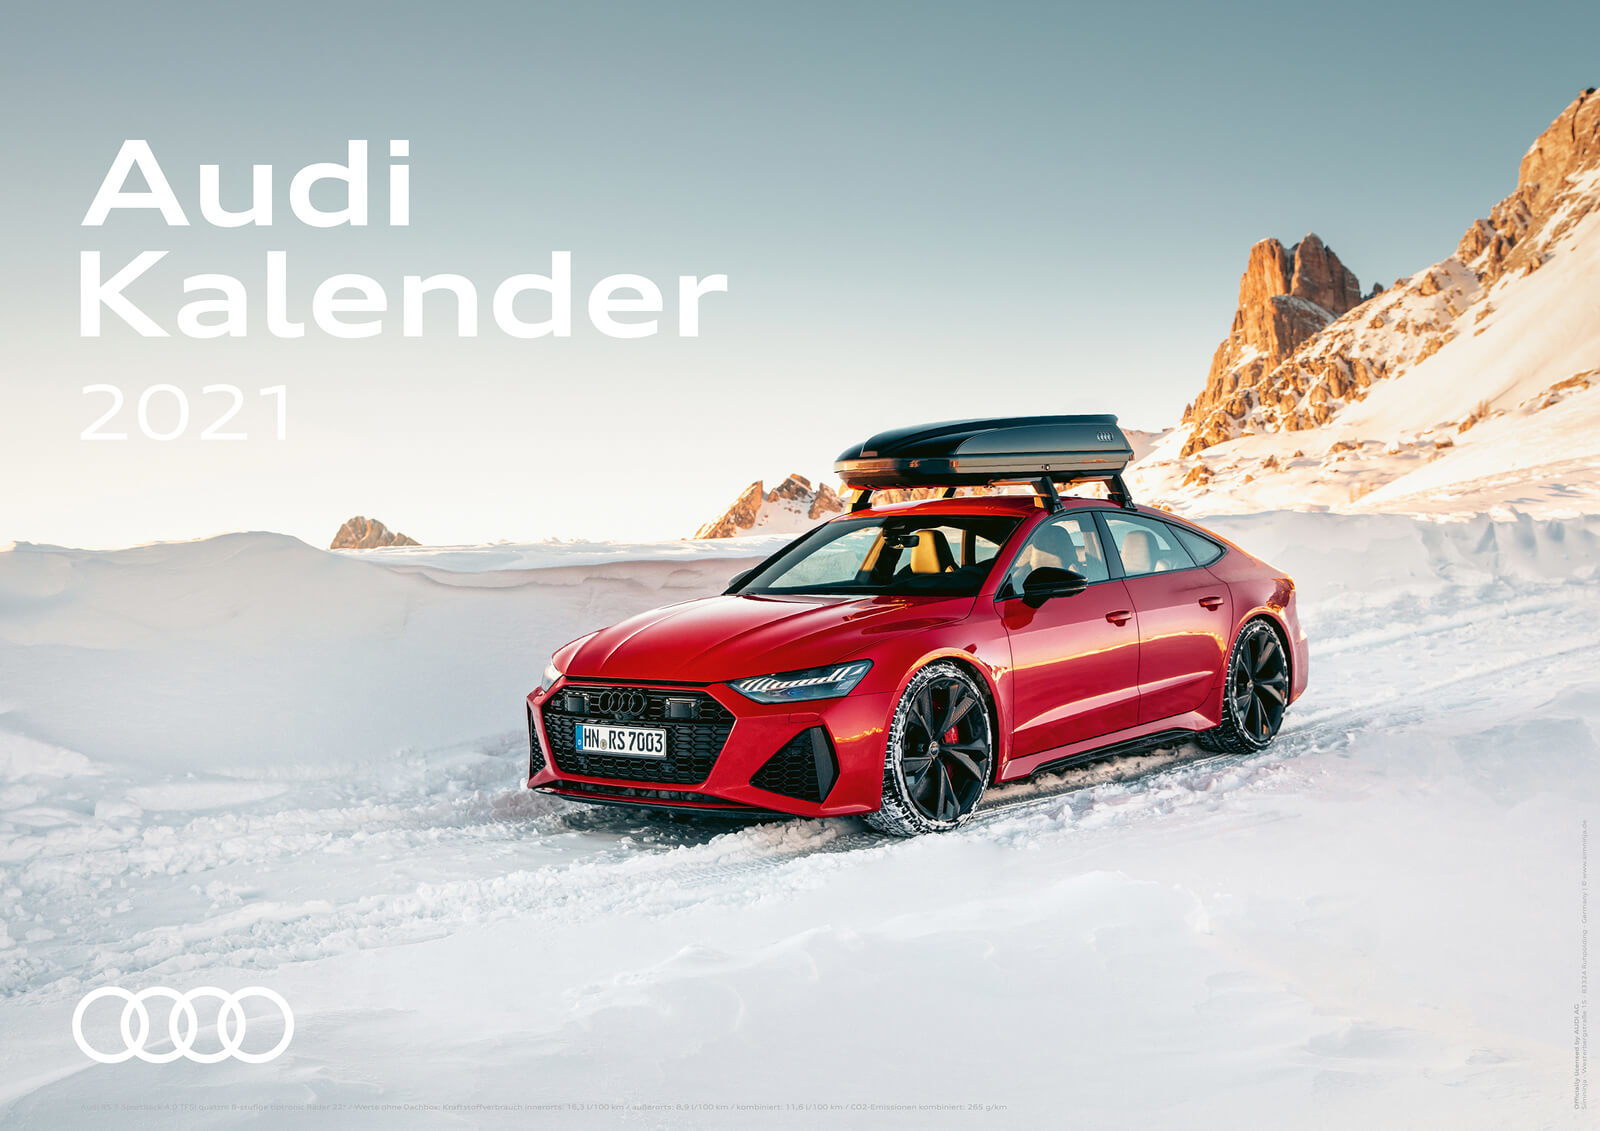 Audi Kalender 2021 - Cover